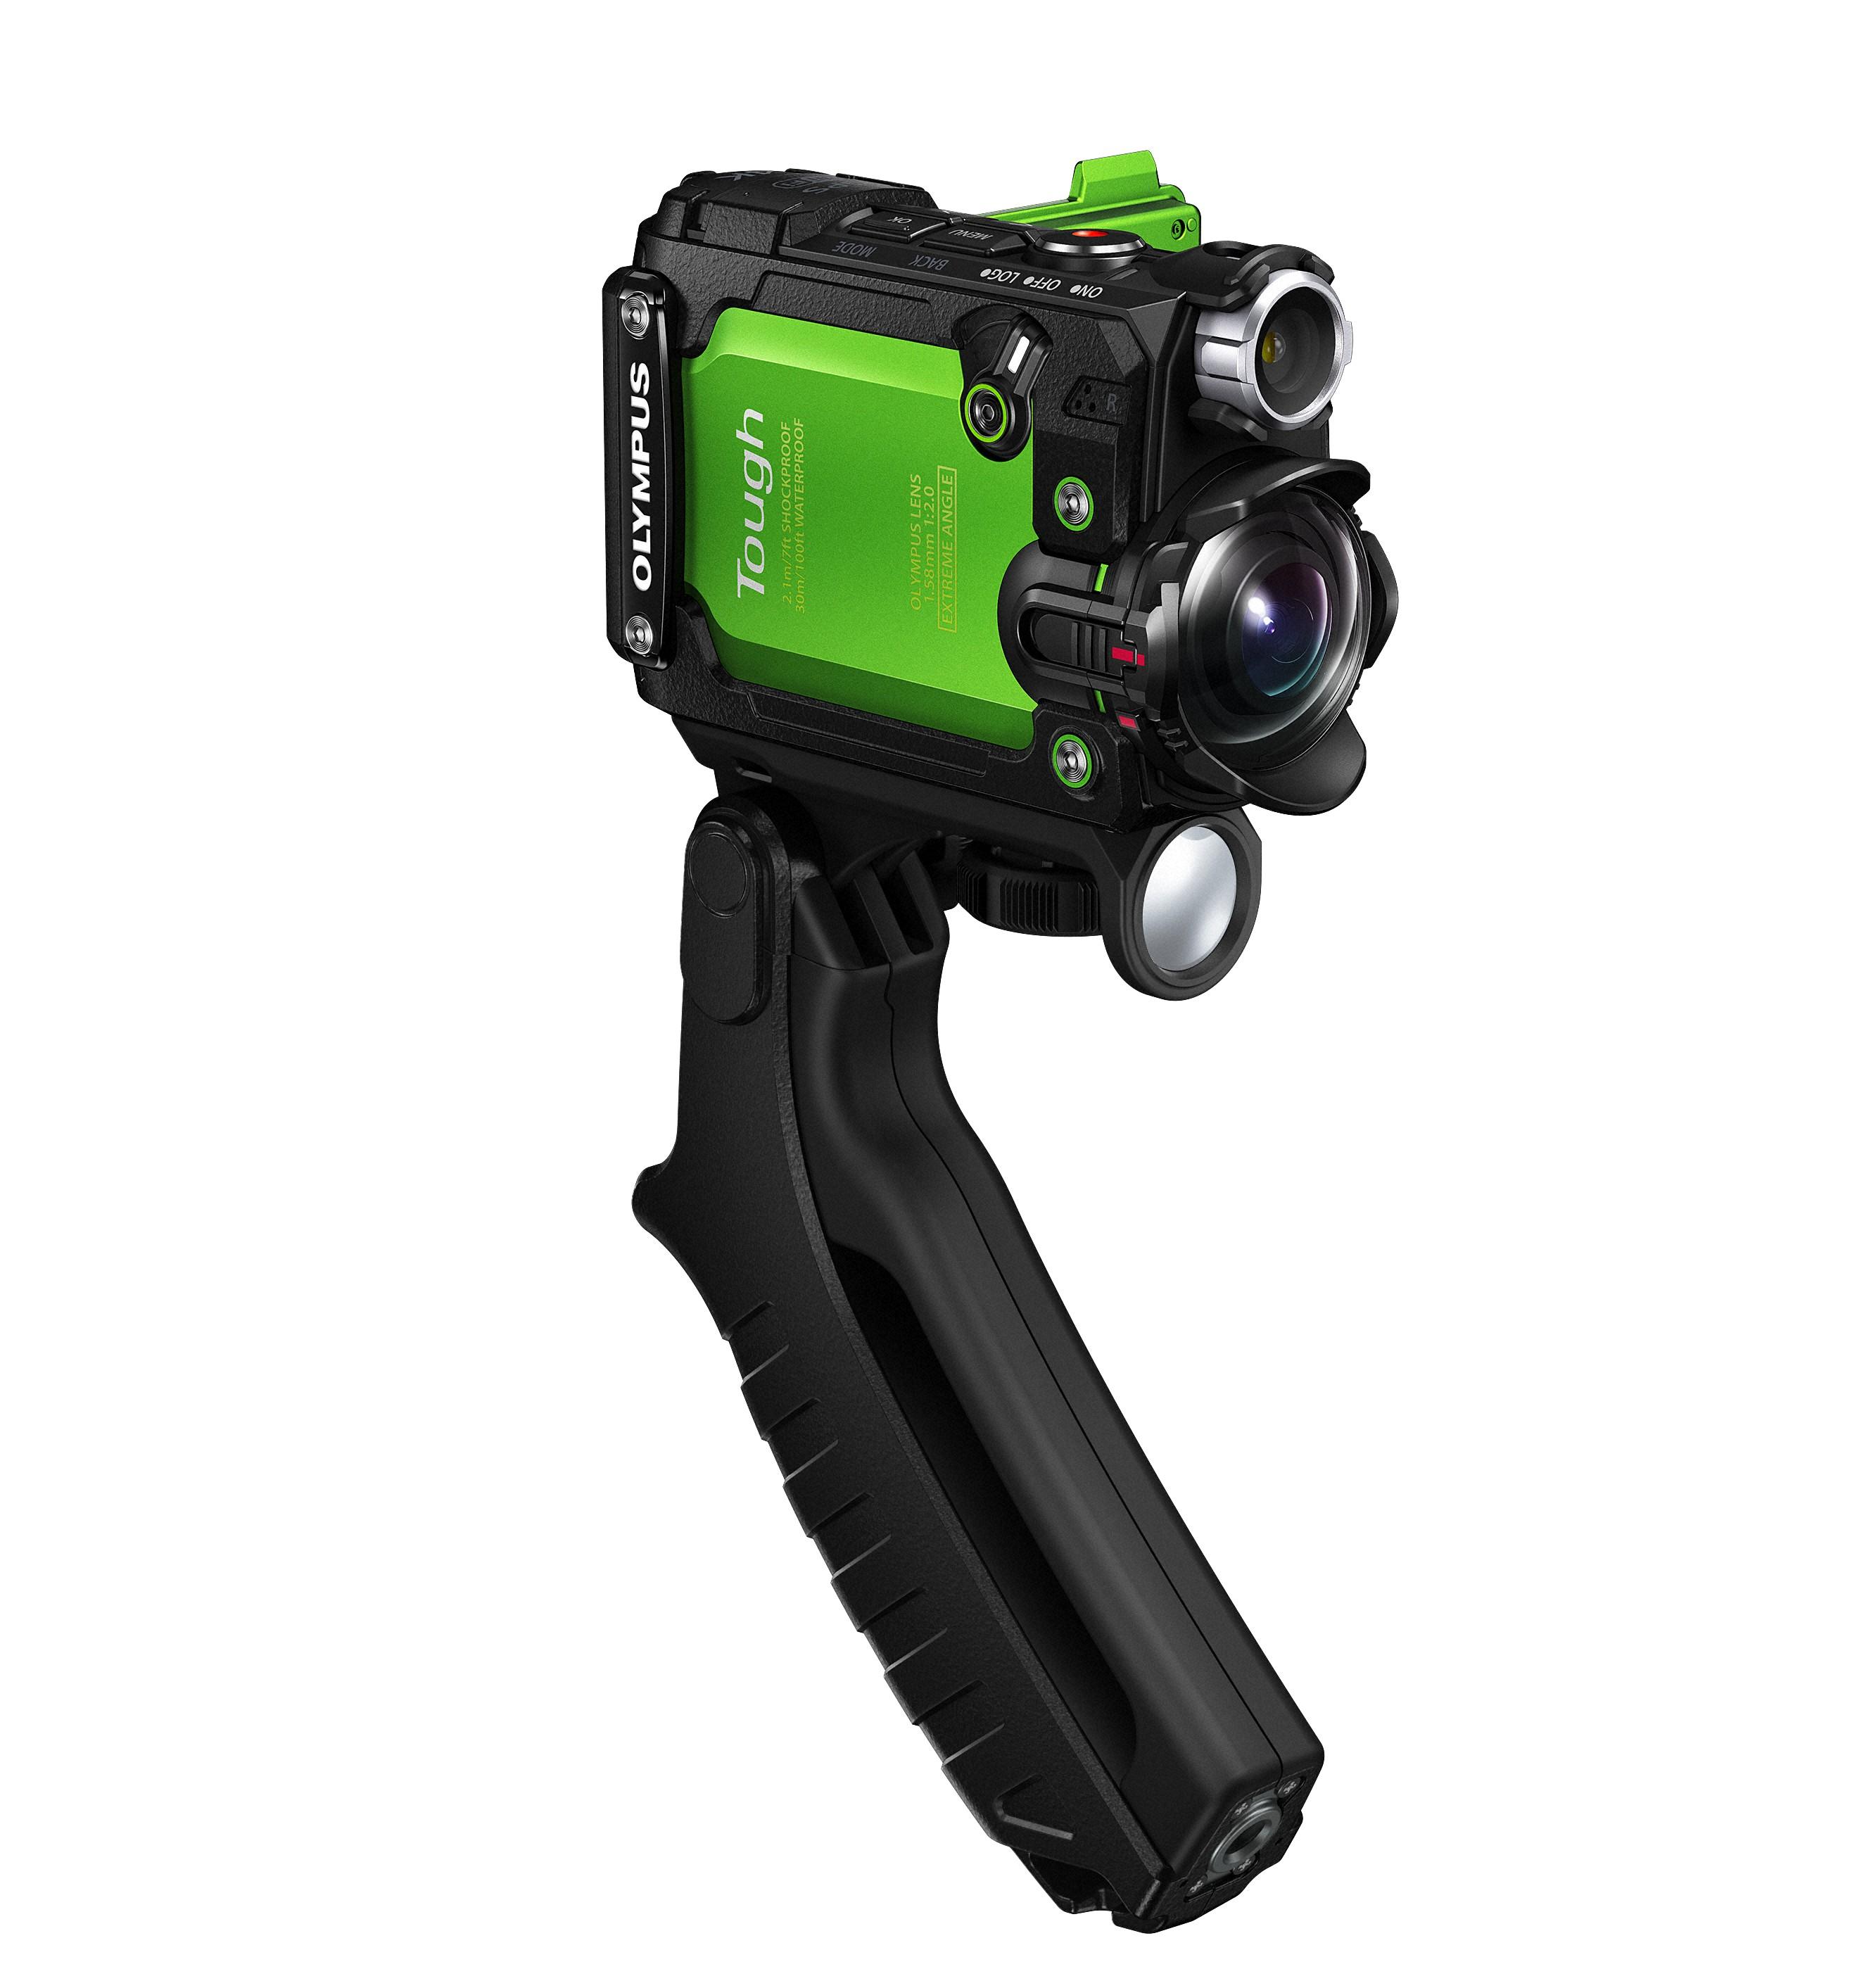 TG-Tracker: Sensorbeladene Olympus-Actionkamera mit 4K-Aufnahme - Golem.de